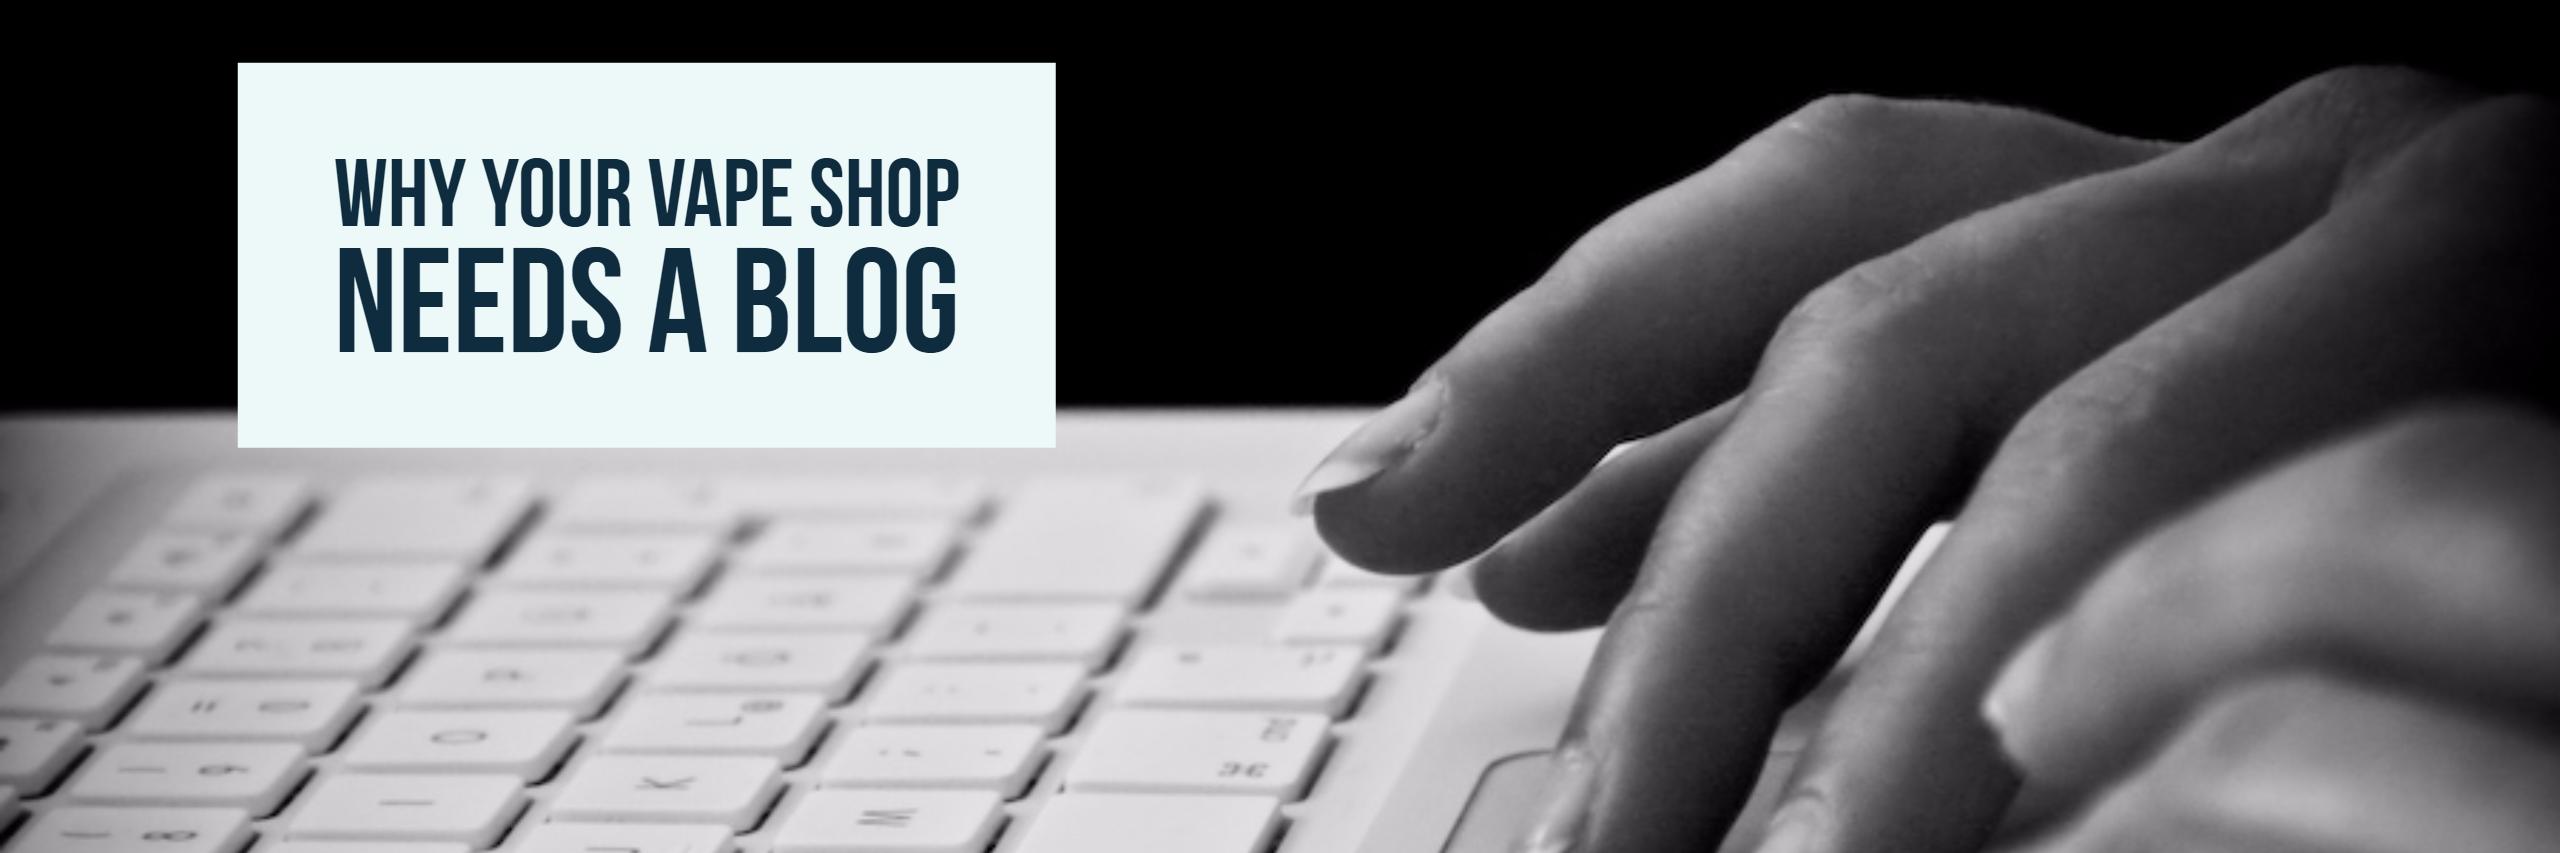 Why Your Vape Shop Needs a Blog